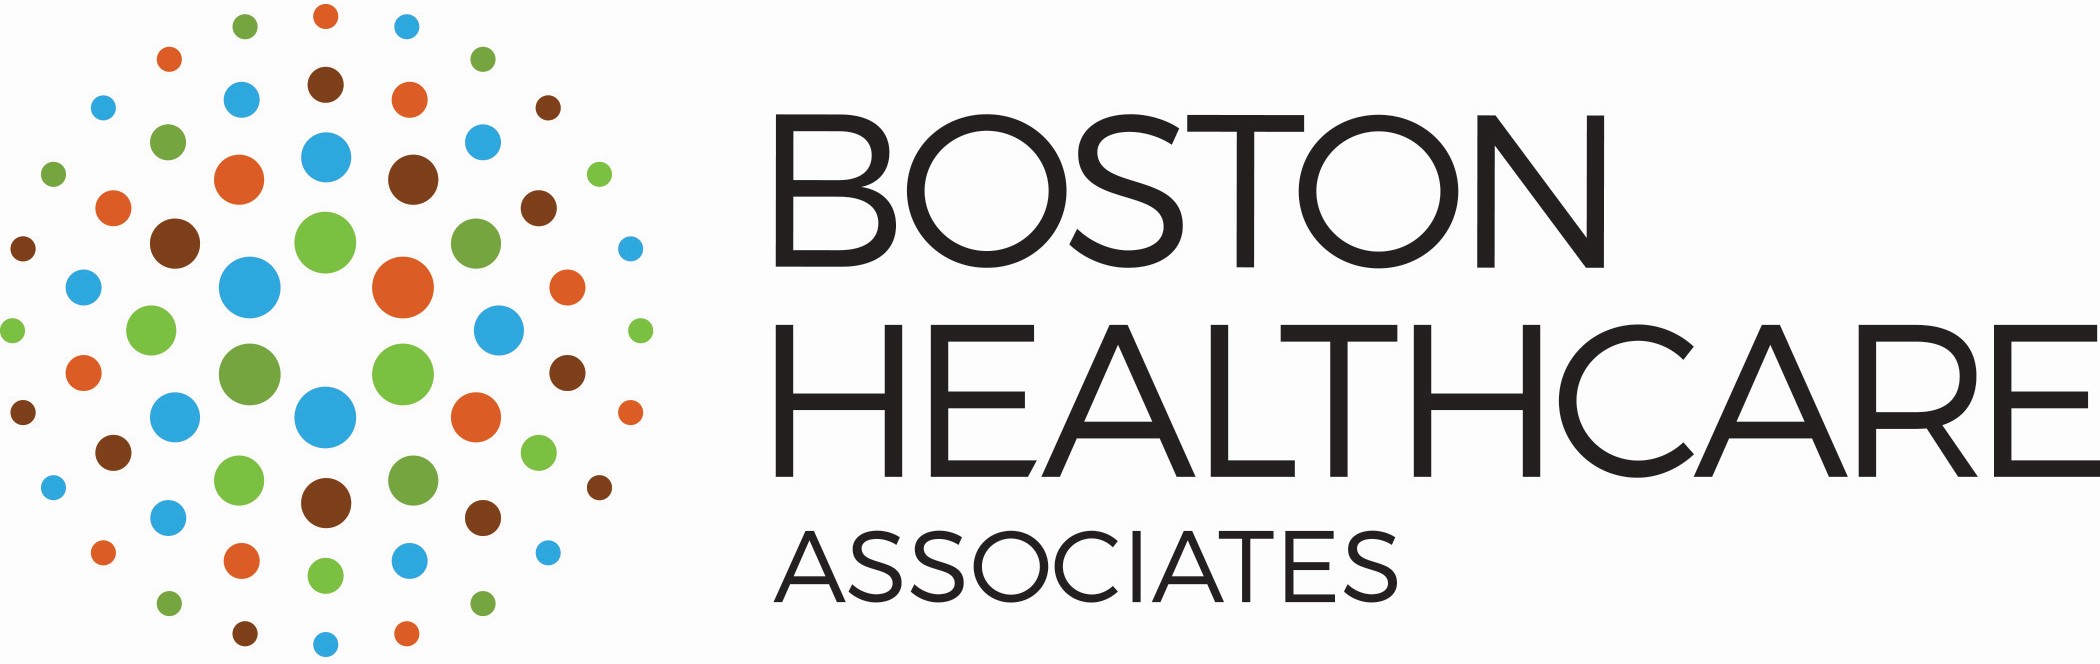 Visit: www.bostonhealthcare.com